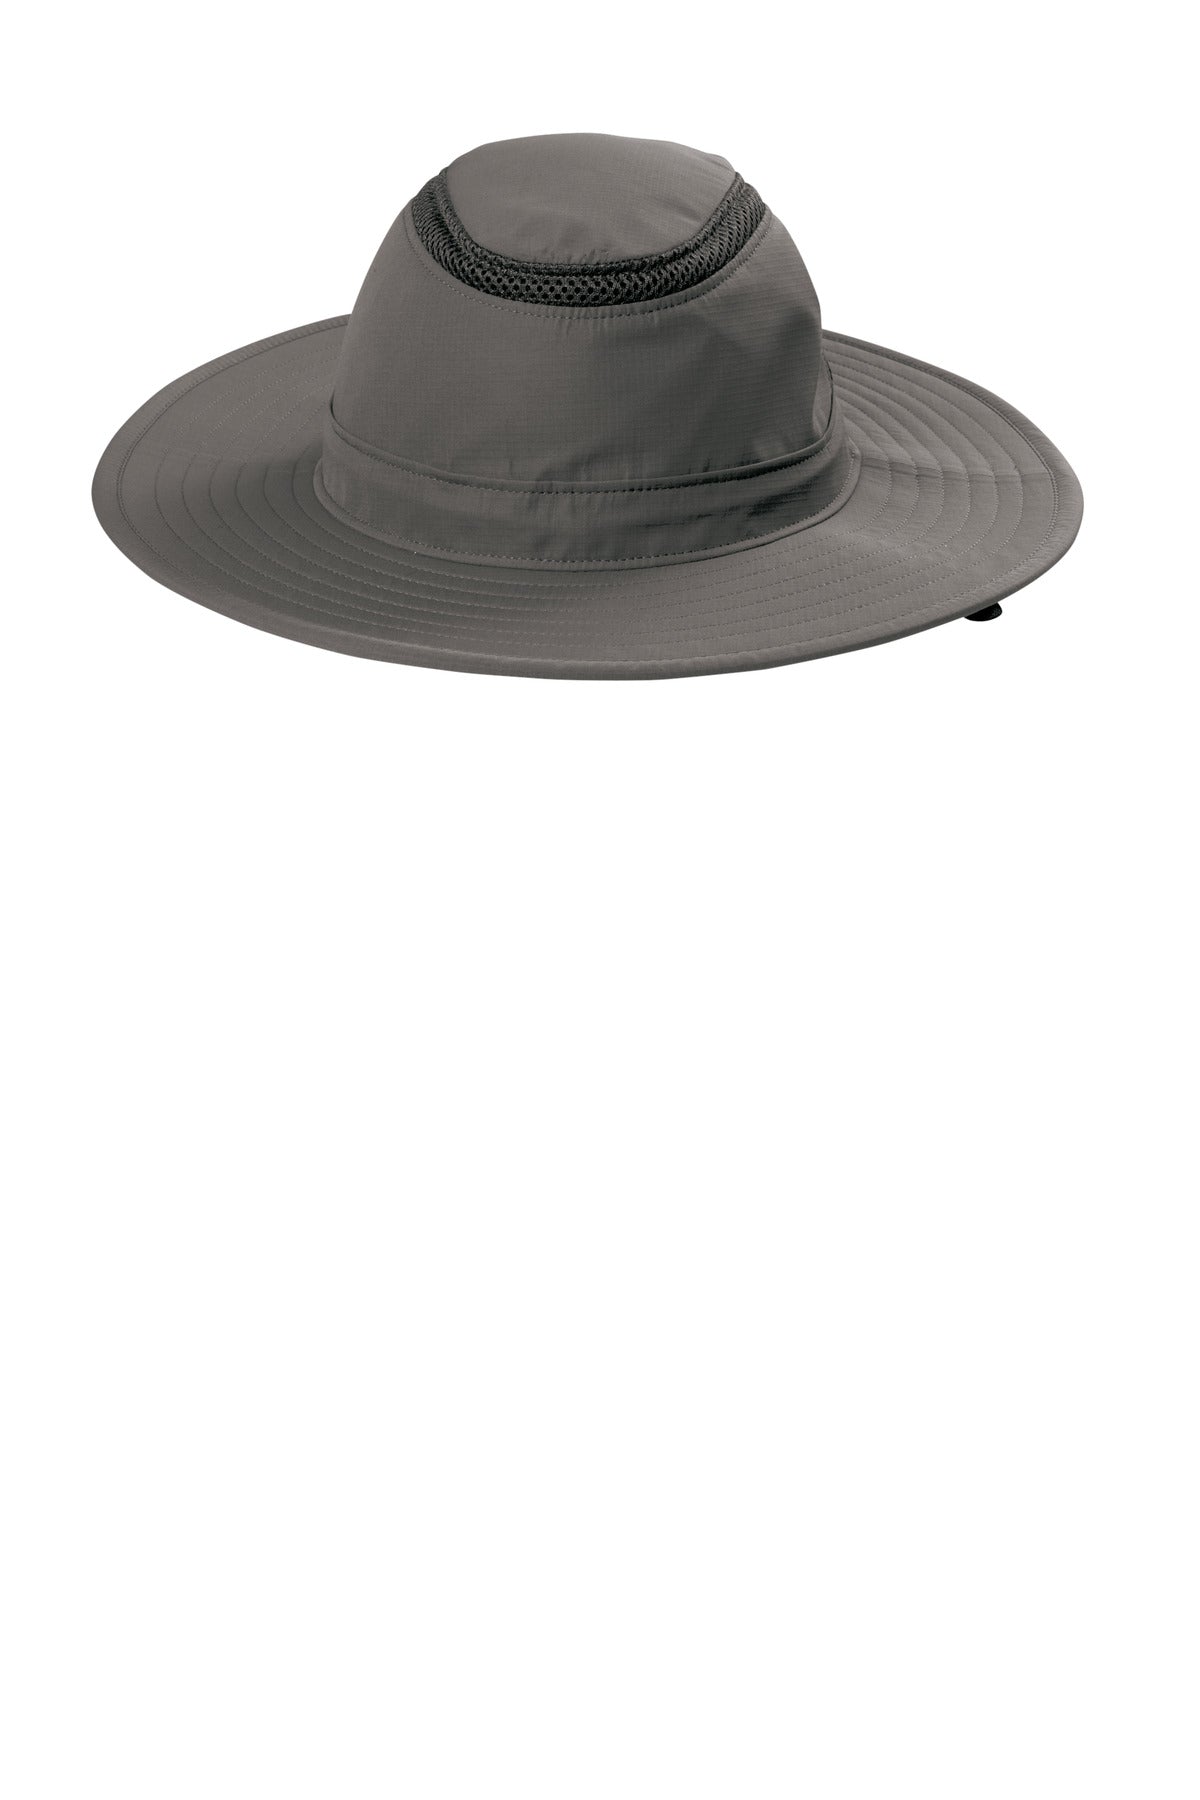 Port Authority Outdoor Ventilated Wide Brim Hat C947